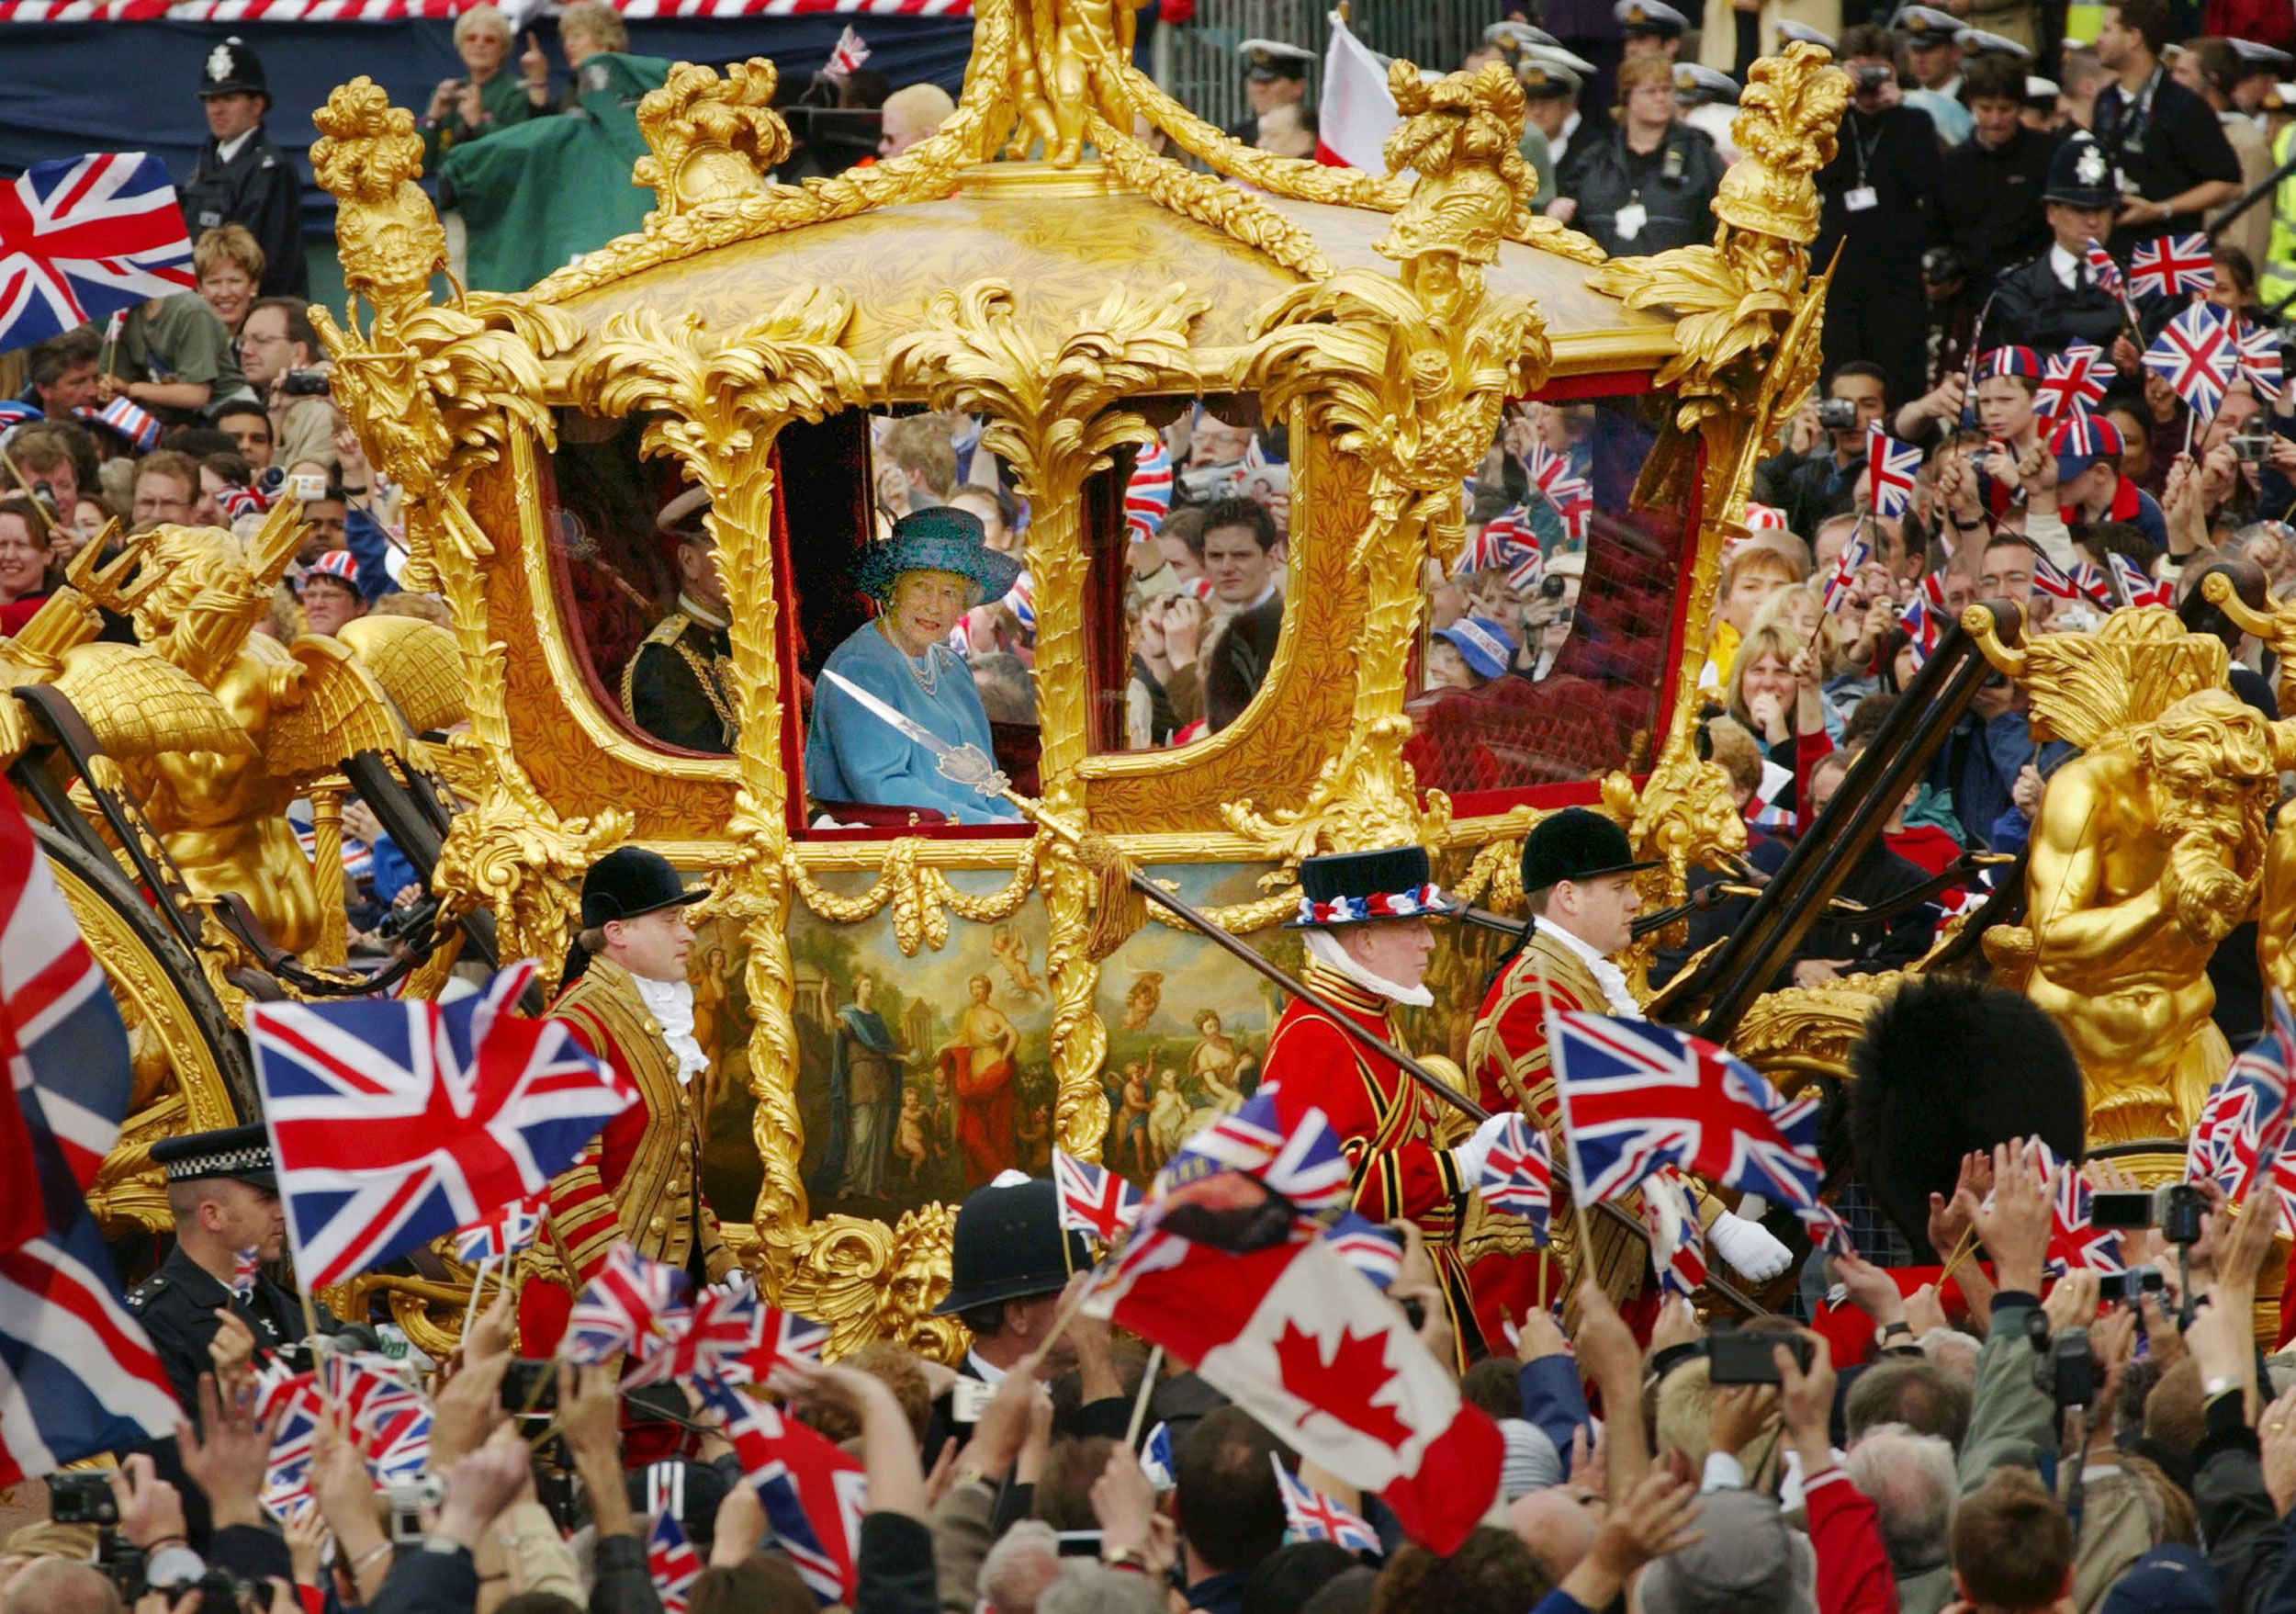 Queen Elizabeth II's jubilee celebrations through the years